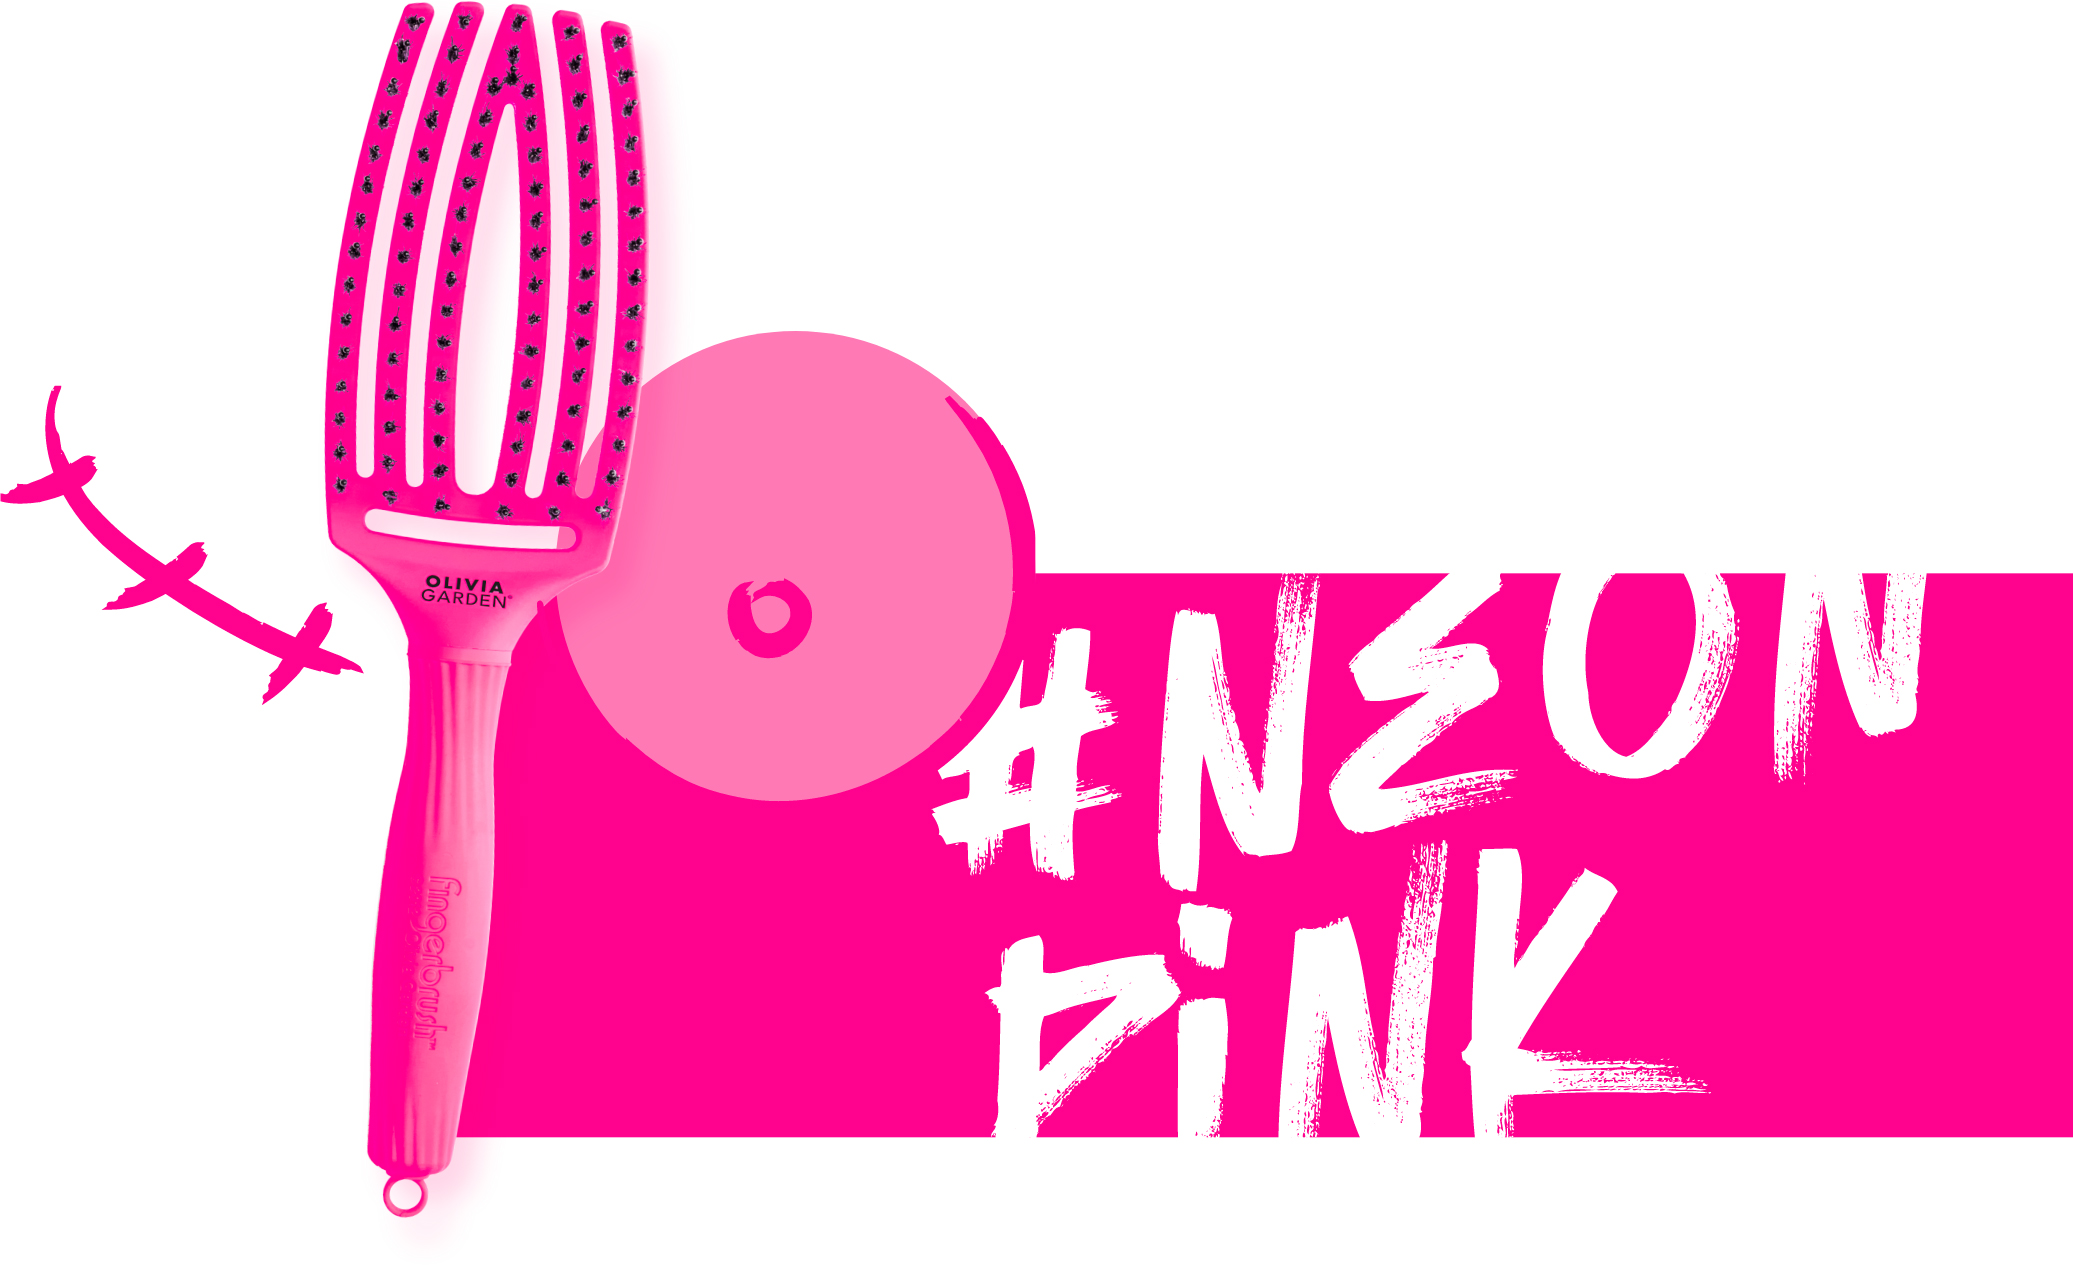 Olivia Garden Fingerbrush Combo Medium Think Pink Neon Pink